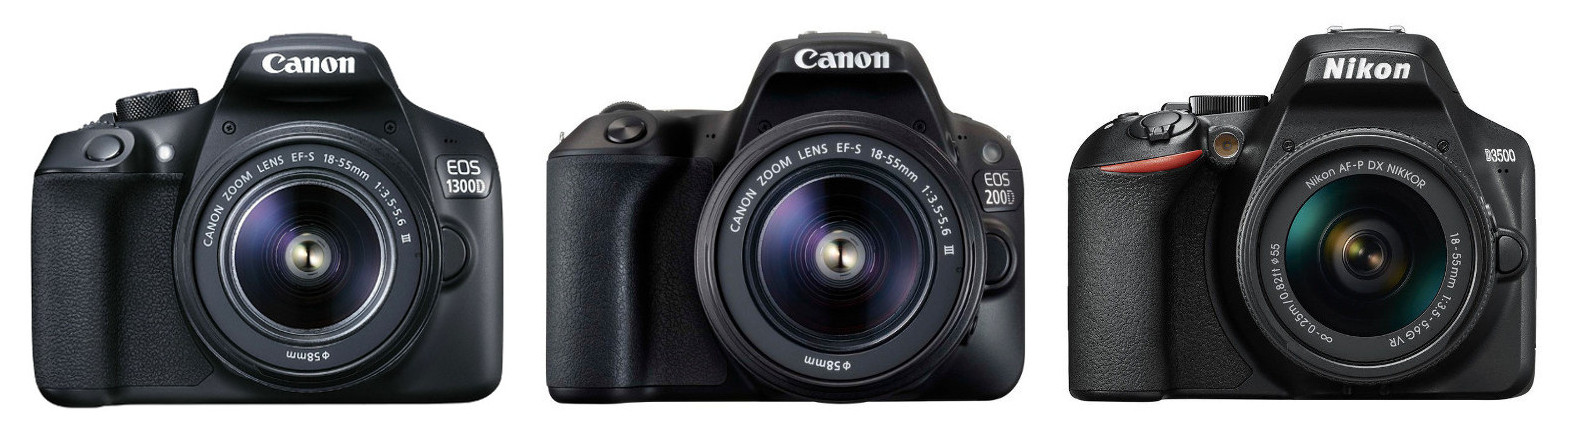 Nikon D3500, Canon 200D, Canon 1300D